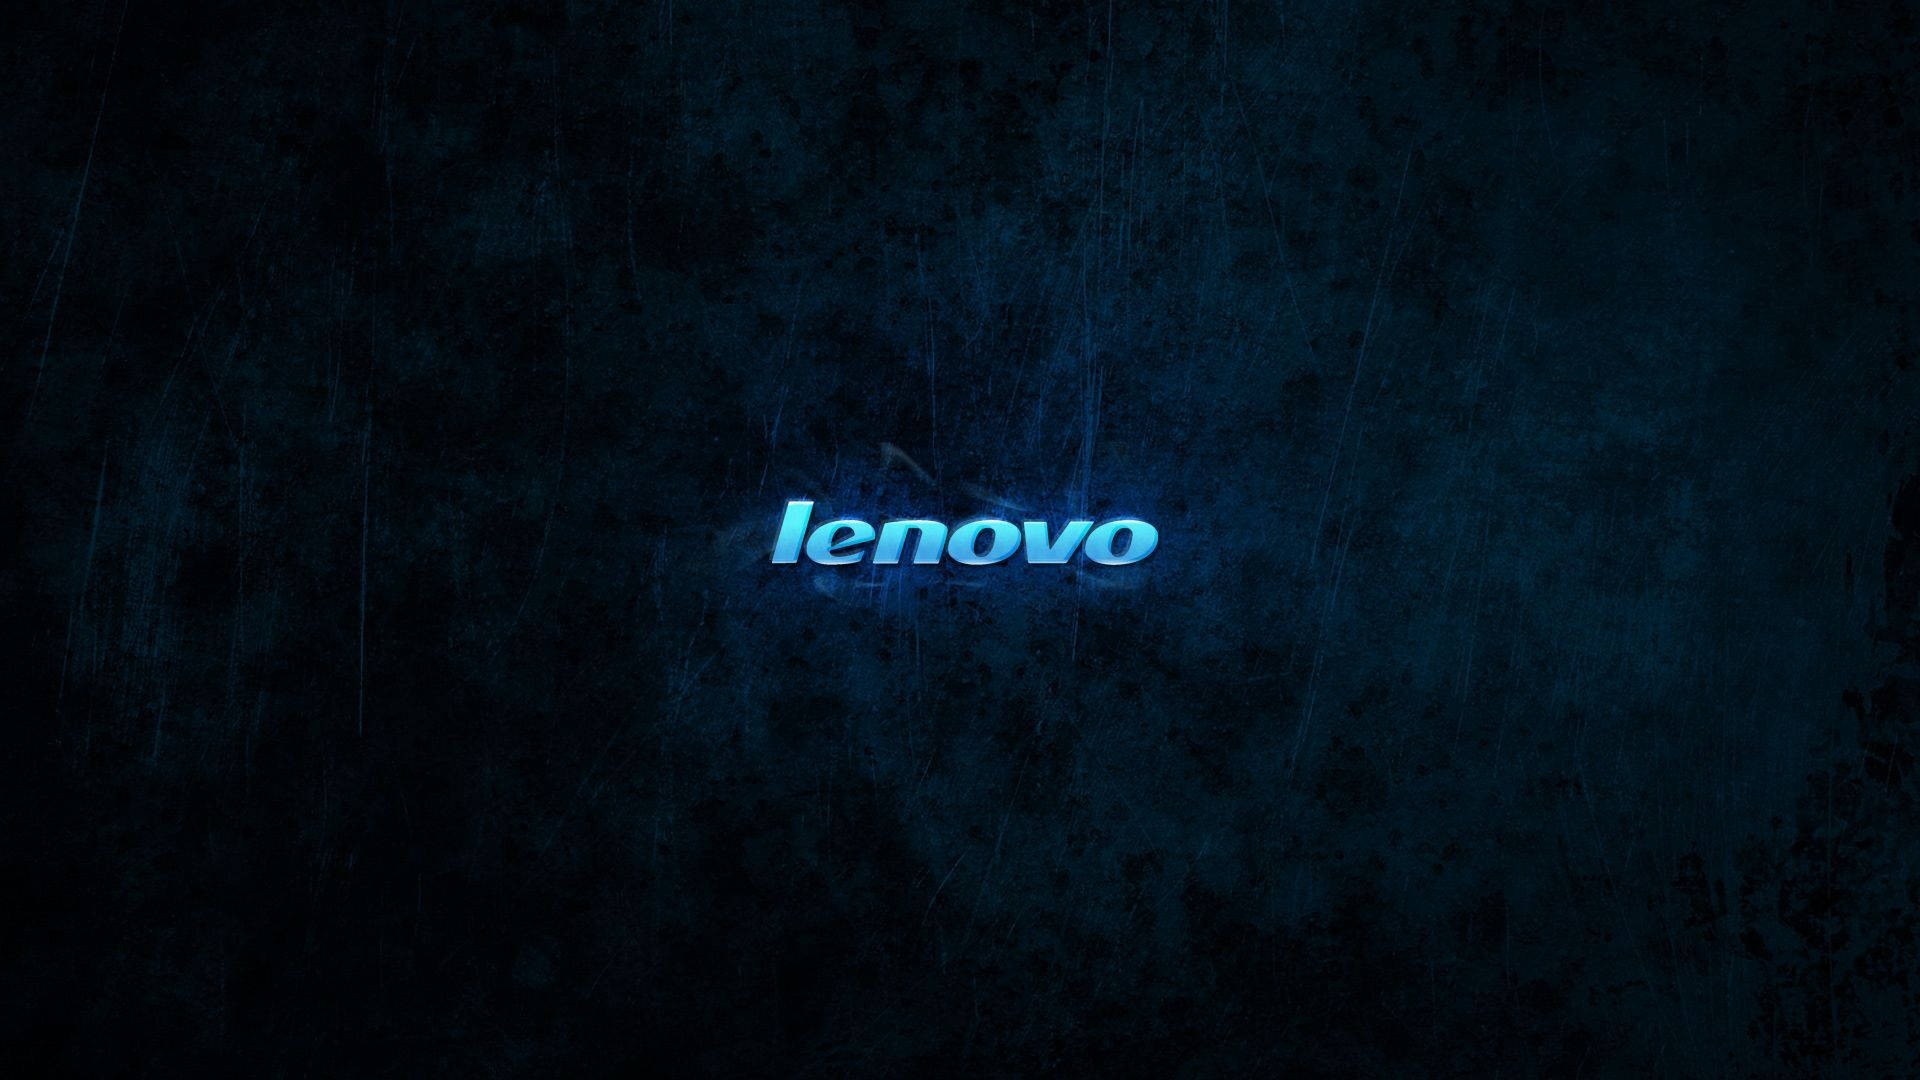 Lenovotablet Hintergrundbild Wallpaper